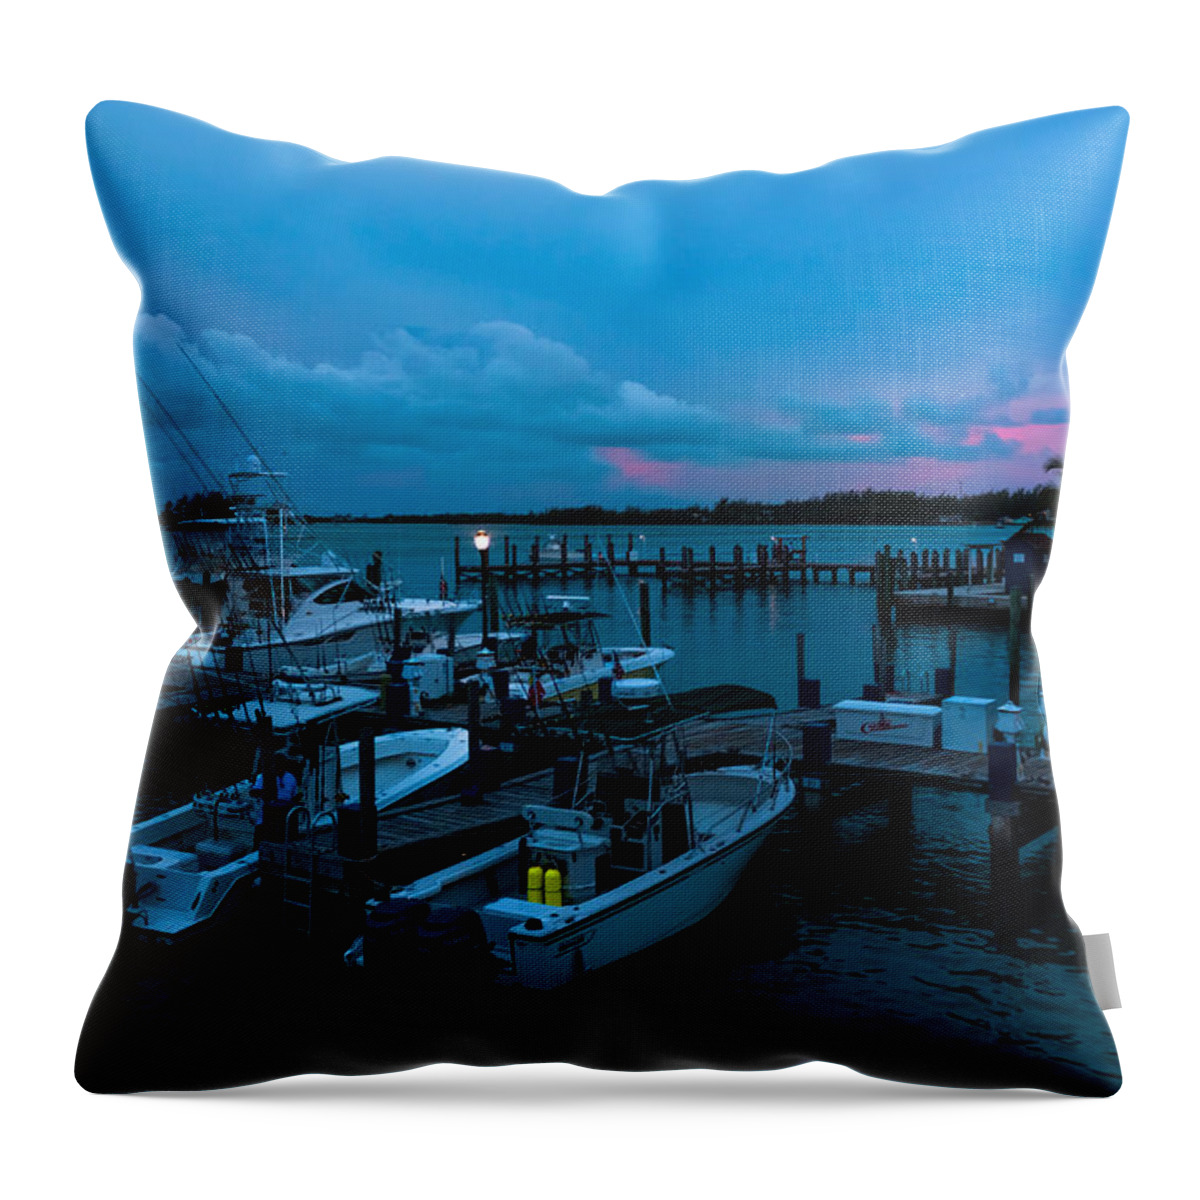 Alice Throw Pillow featuring the photograph Bimini Big Game Club Docks After Sundown by Ed Gleichman